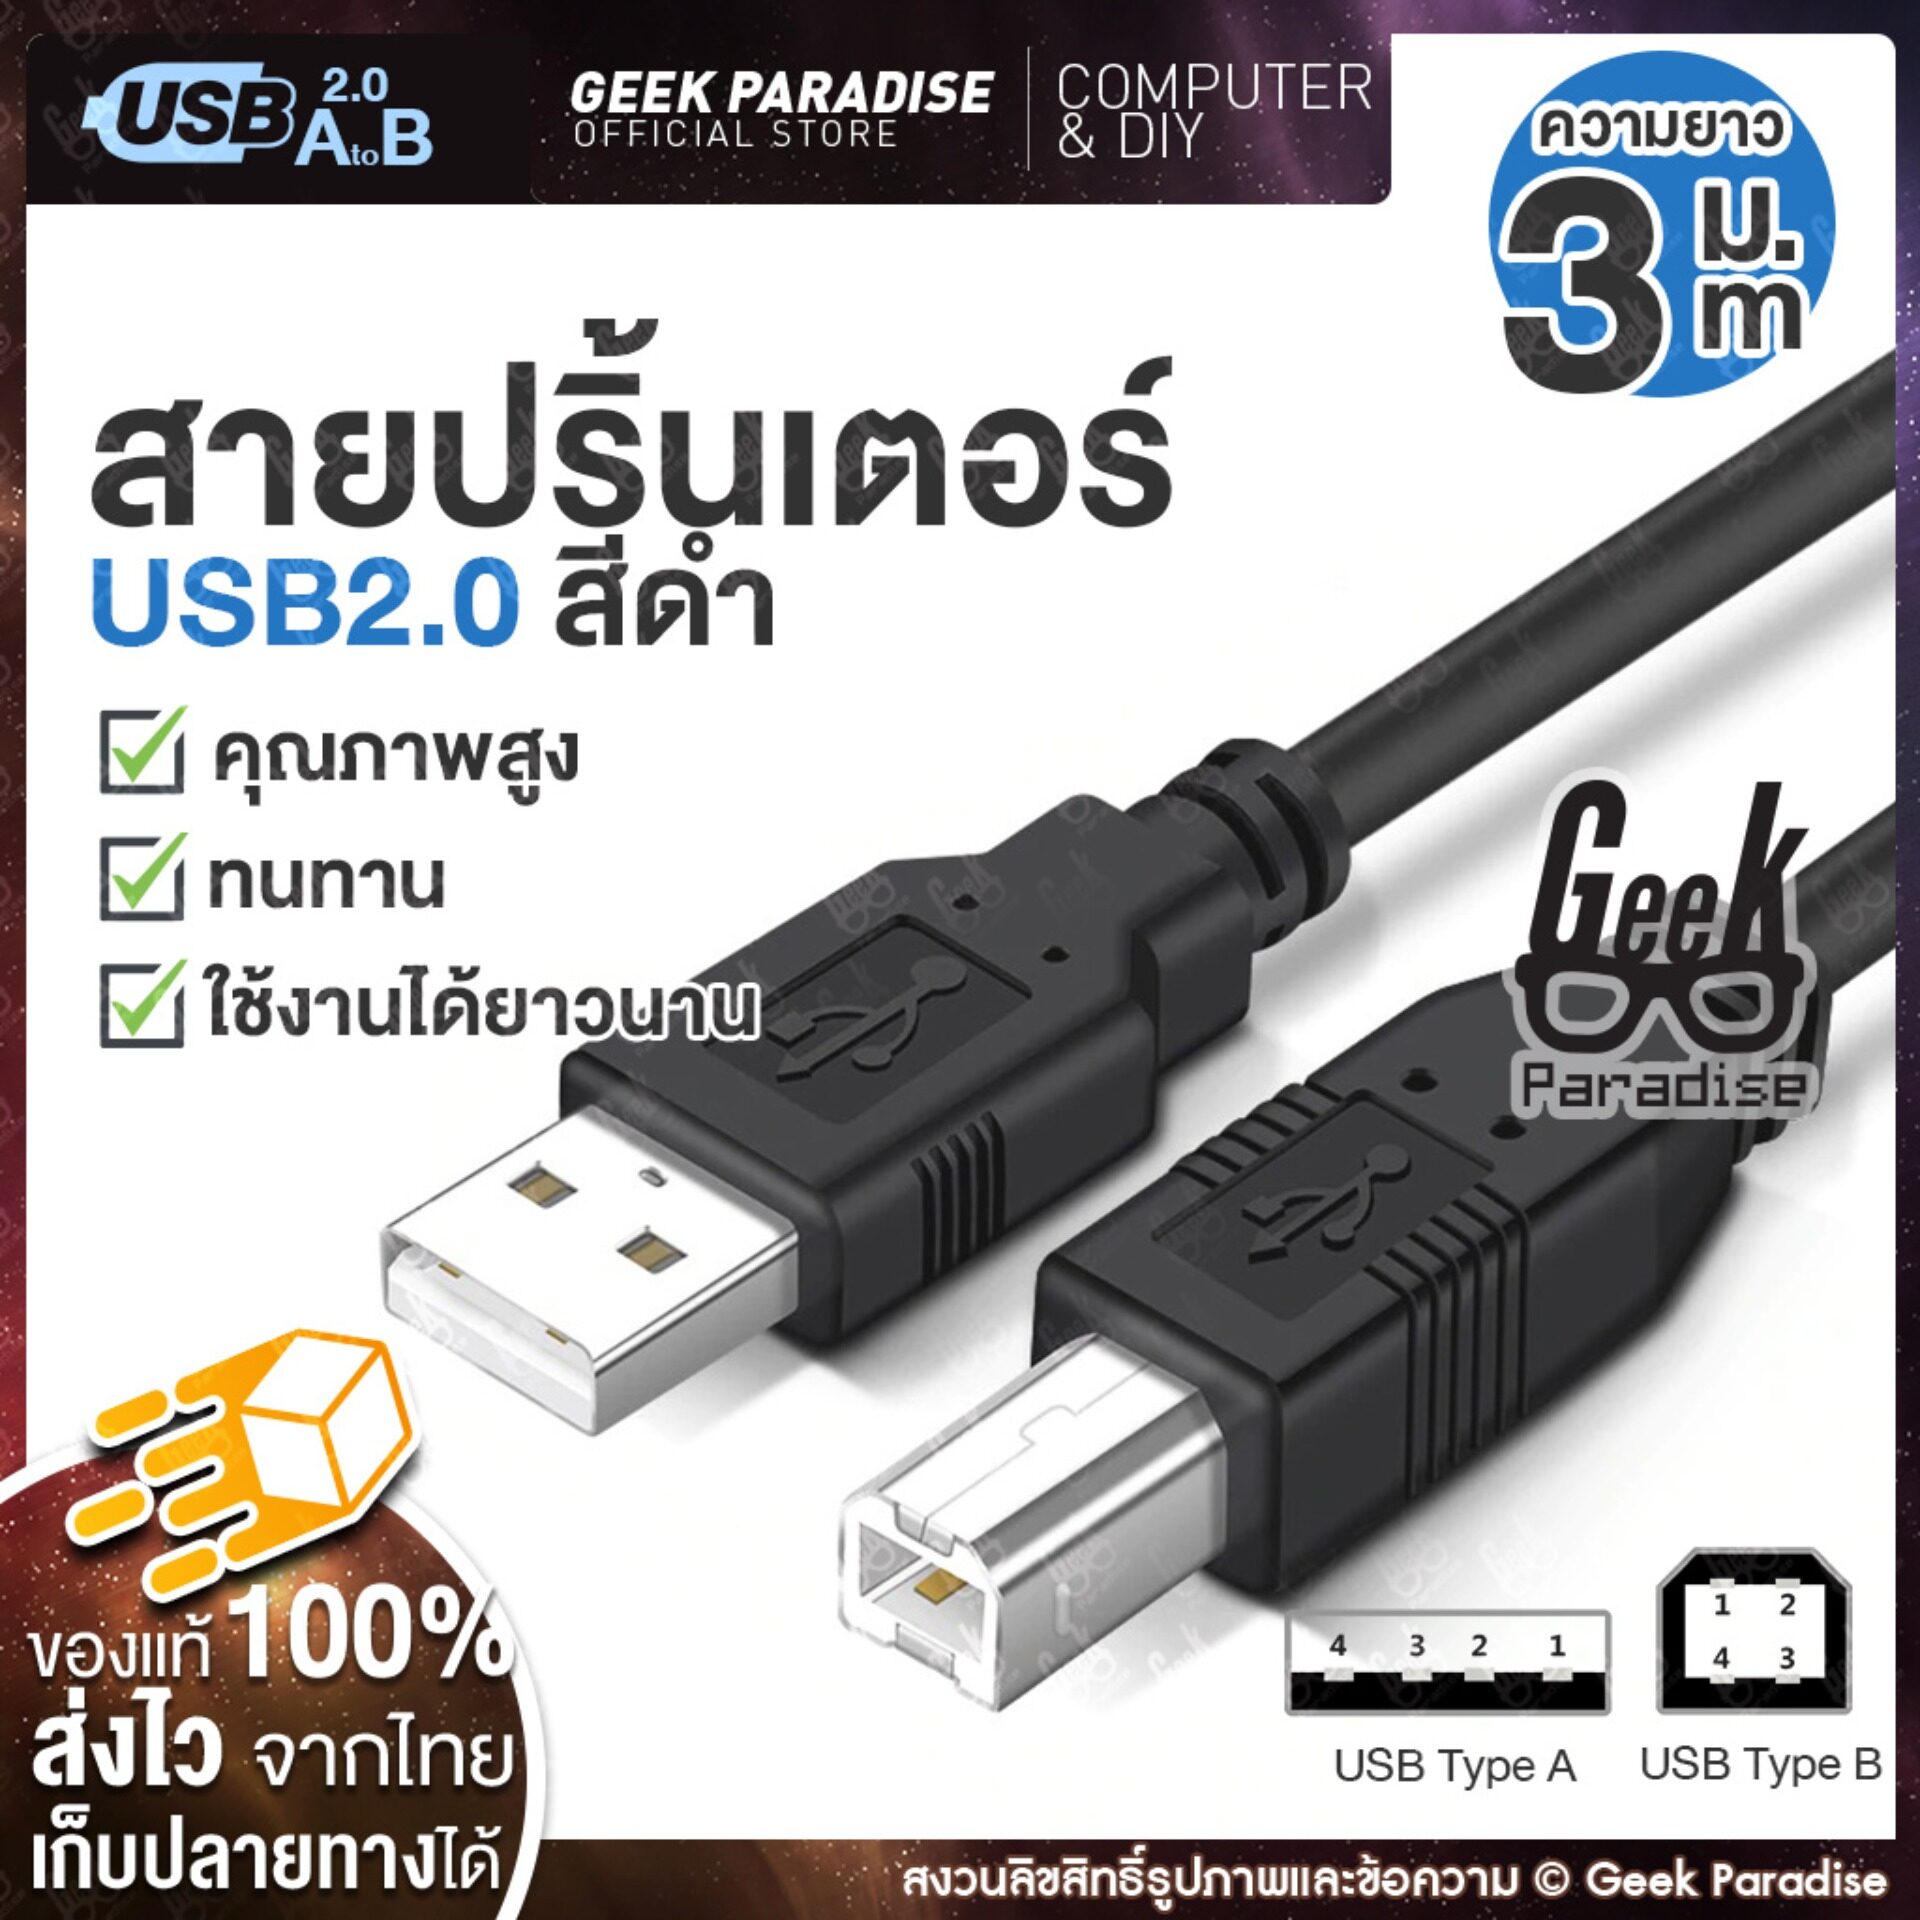 [3M] สาย USB Printer 3 เมตร สำหรับเครื่องปริ้นเตอร์, สแกนเนอร์ ความเร็วสูง แบบพอร์ต  Type A Male To B Male สายปริ้นเตอร์เกรด A คุณภาพสูง สีดำ